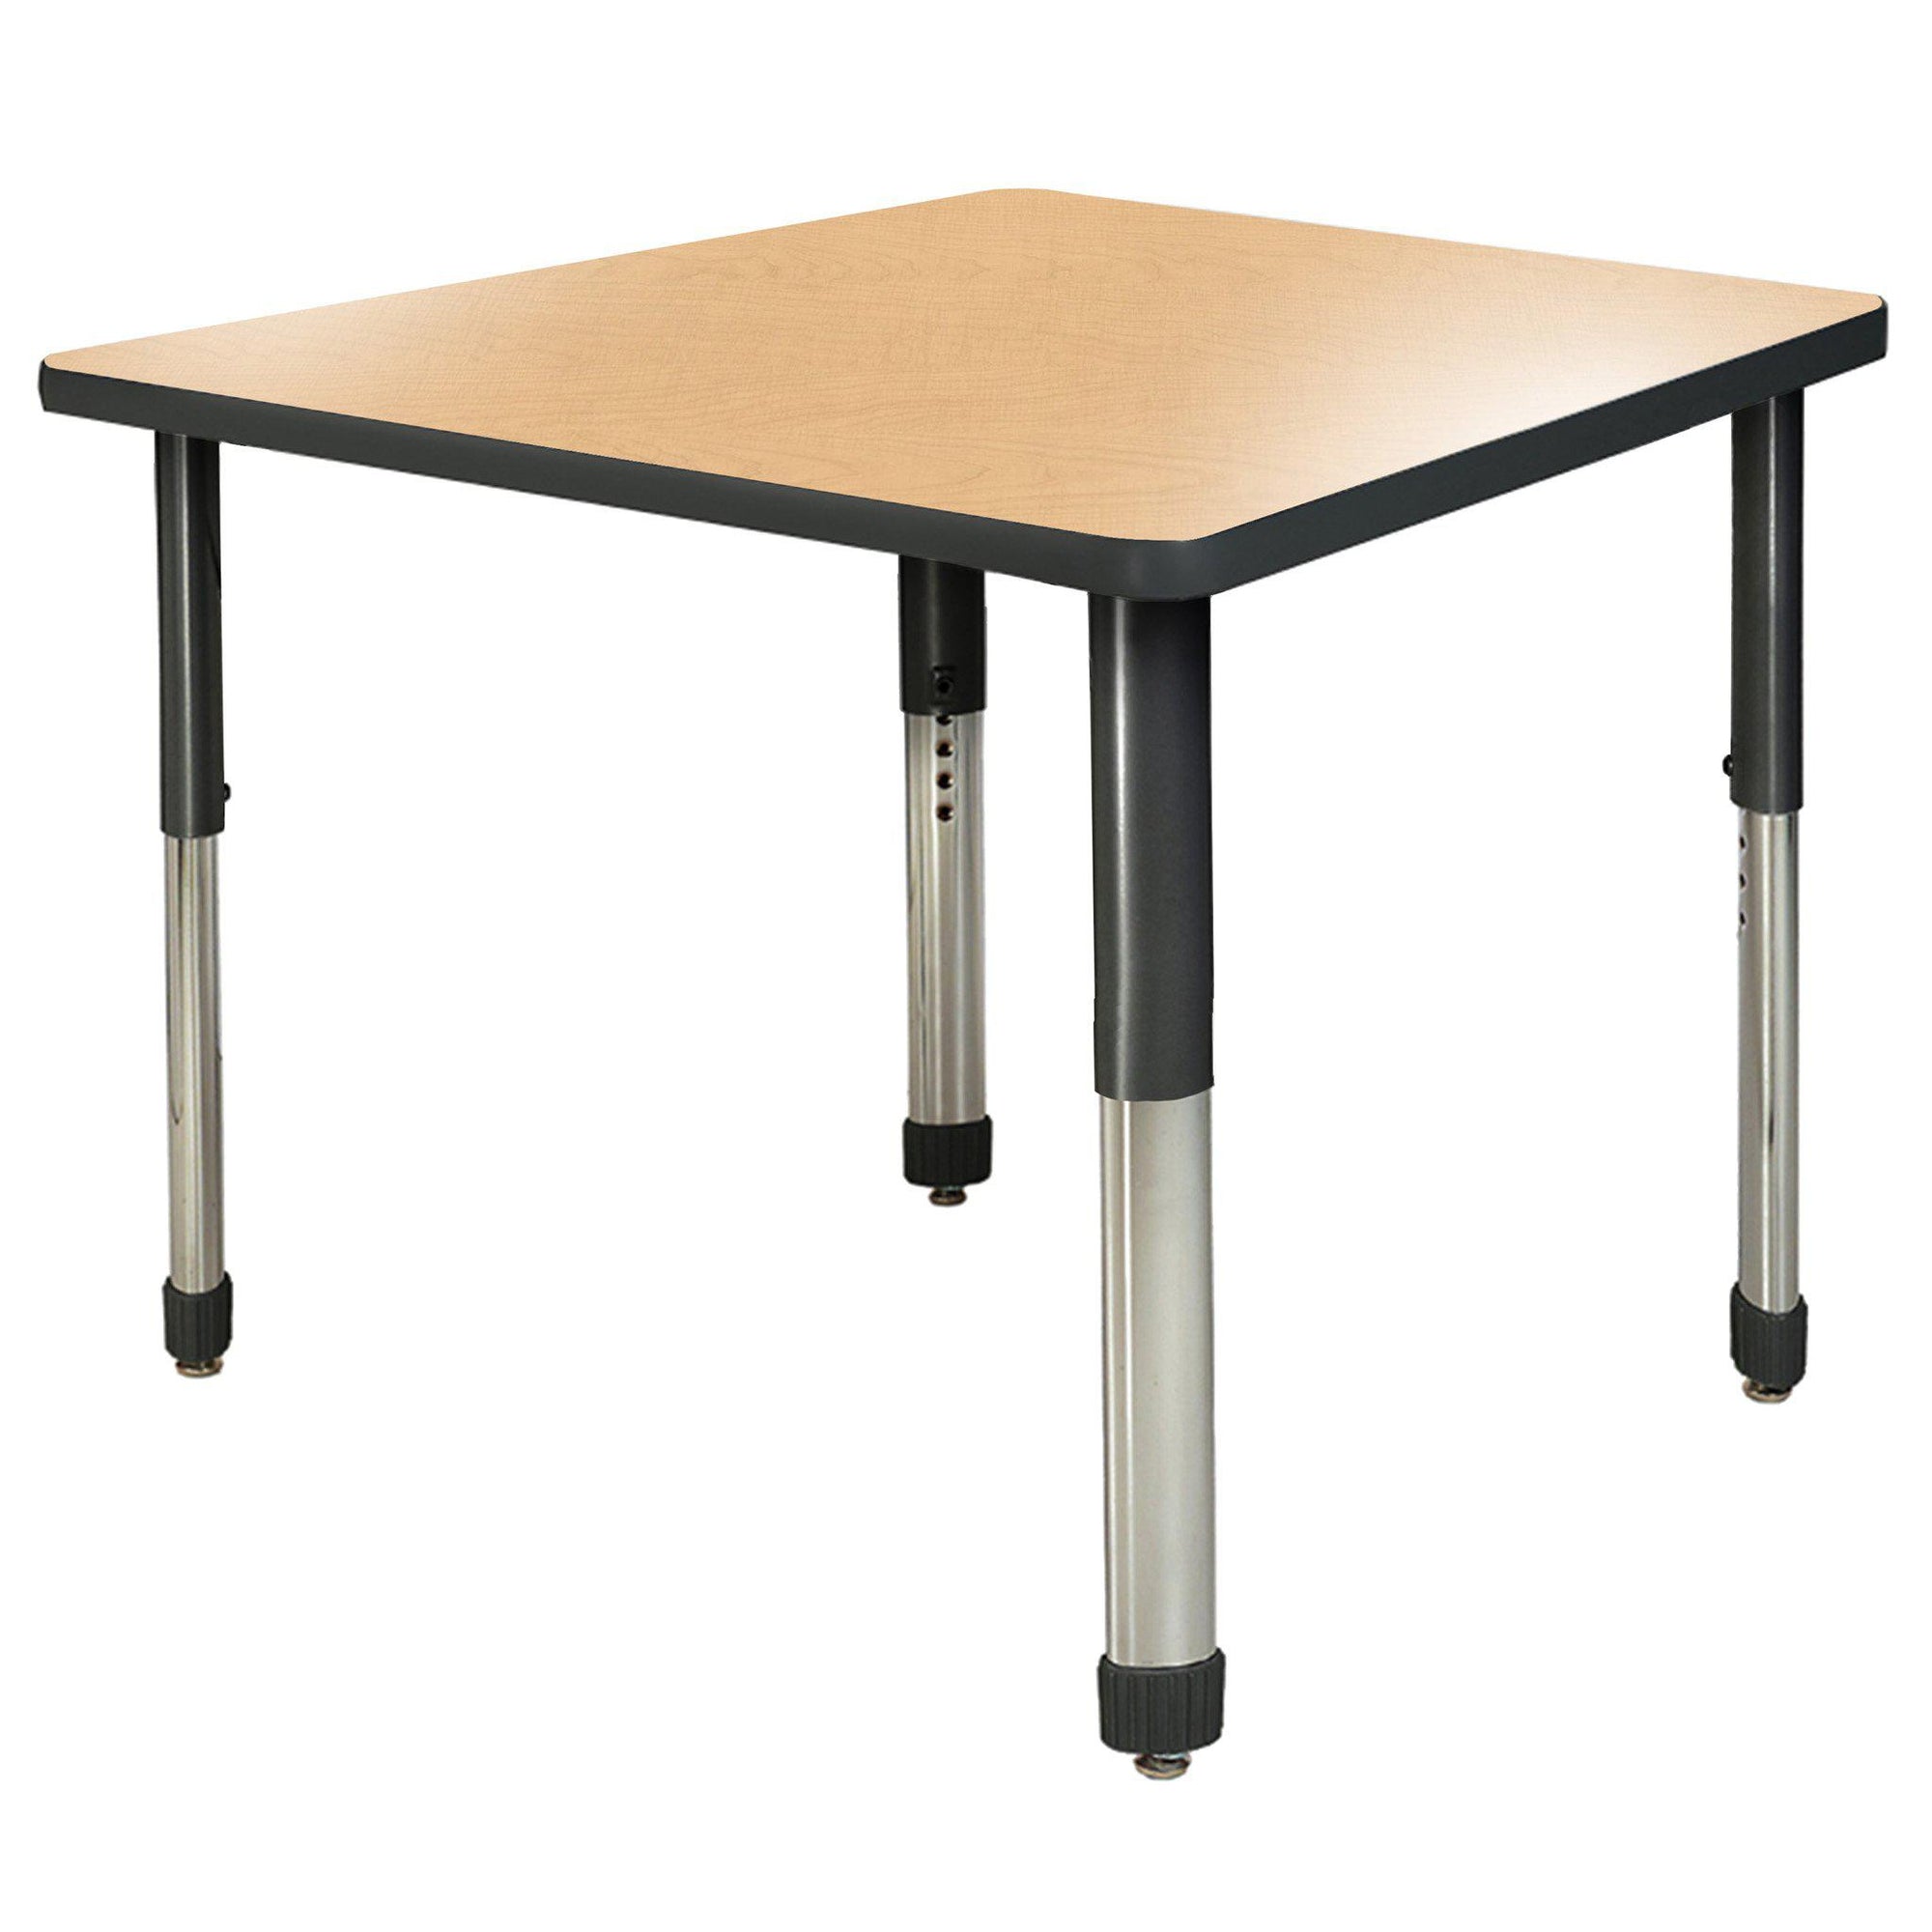 Aero Activity Table, 48" x 48" Square, Oval Adjustable Height Legs